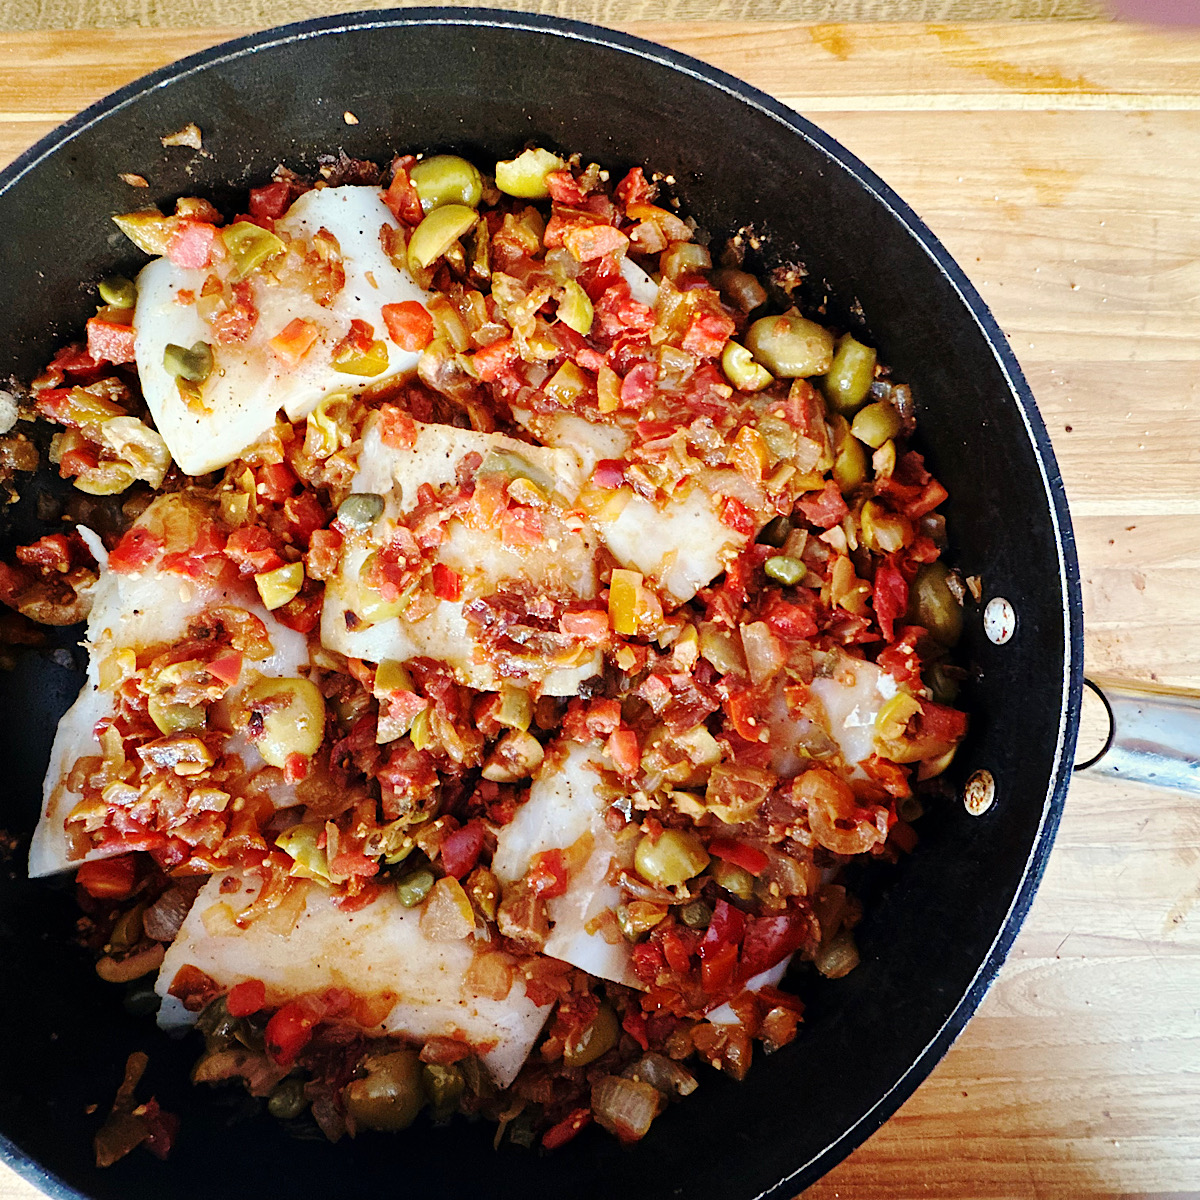 Cod filets nestled into veracruz sauce in a skillet.